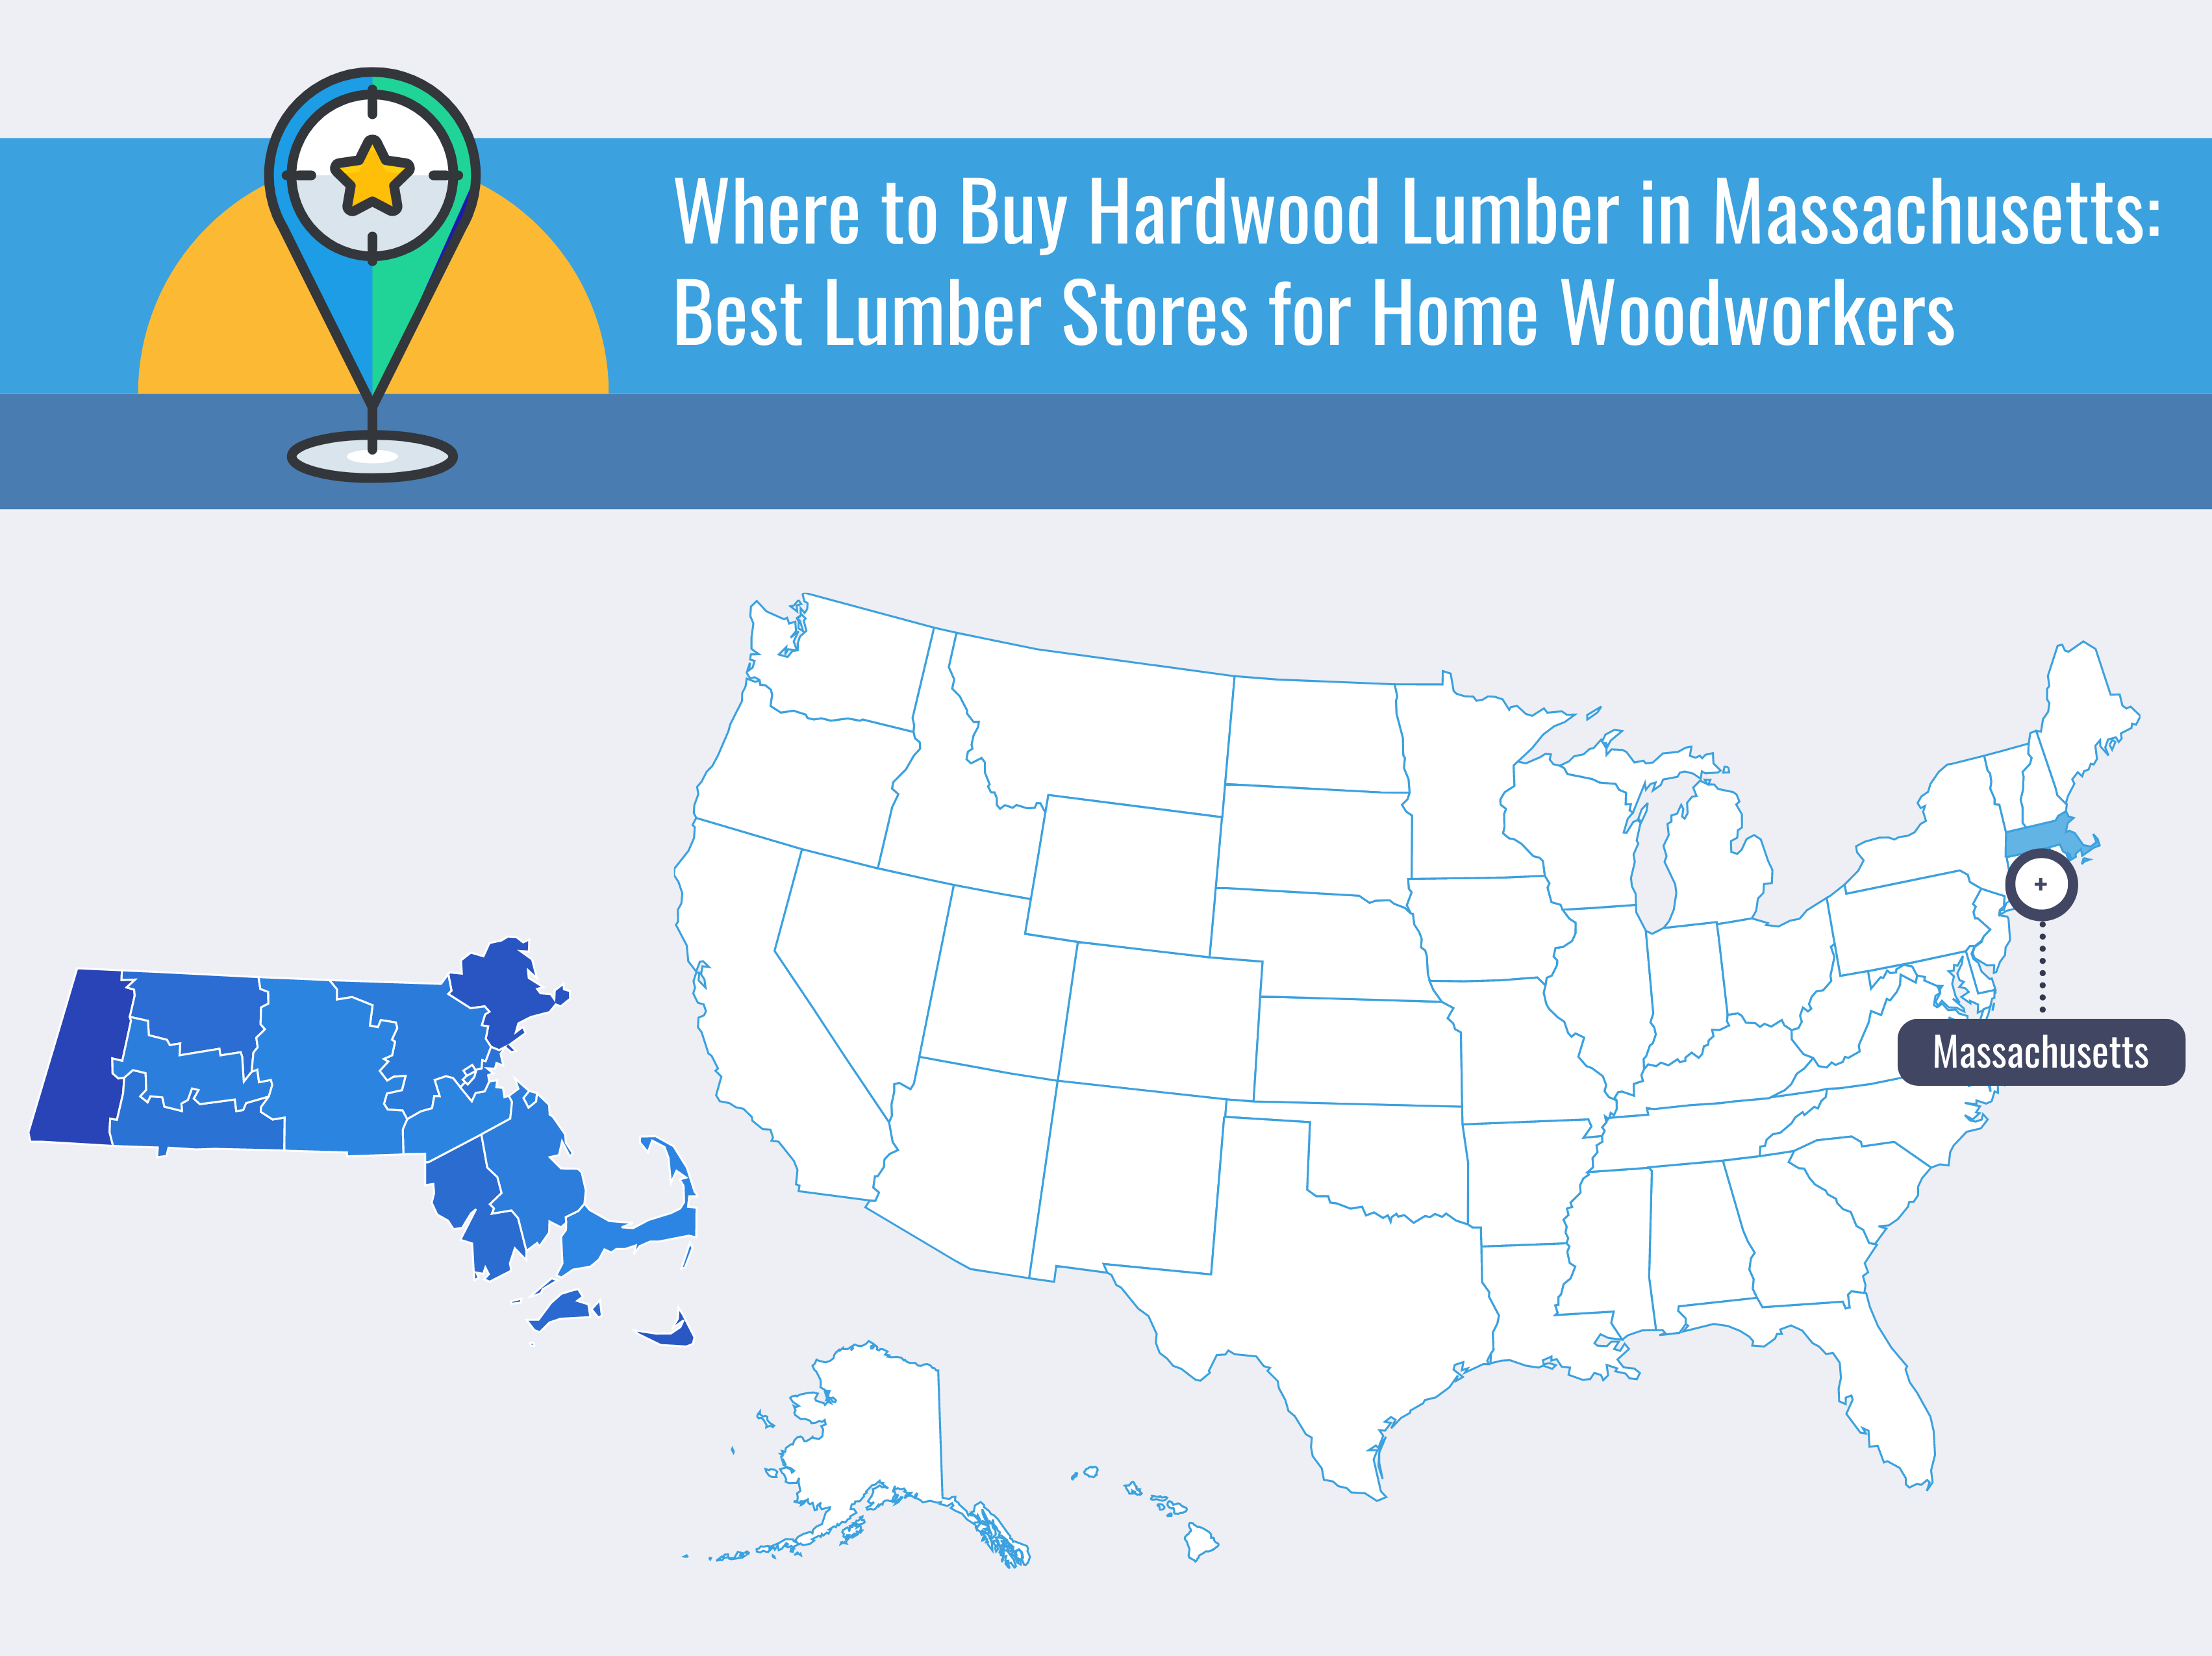 Where to Buy Hardwood Lumber in Massachusetts